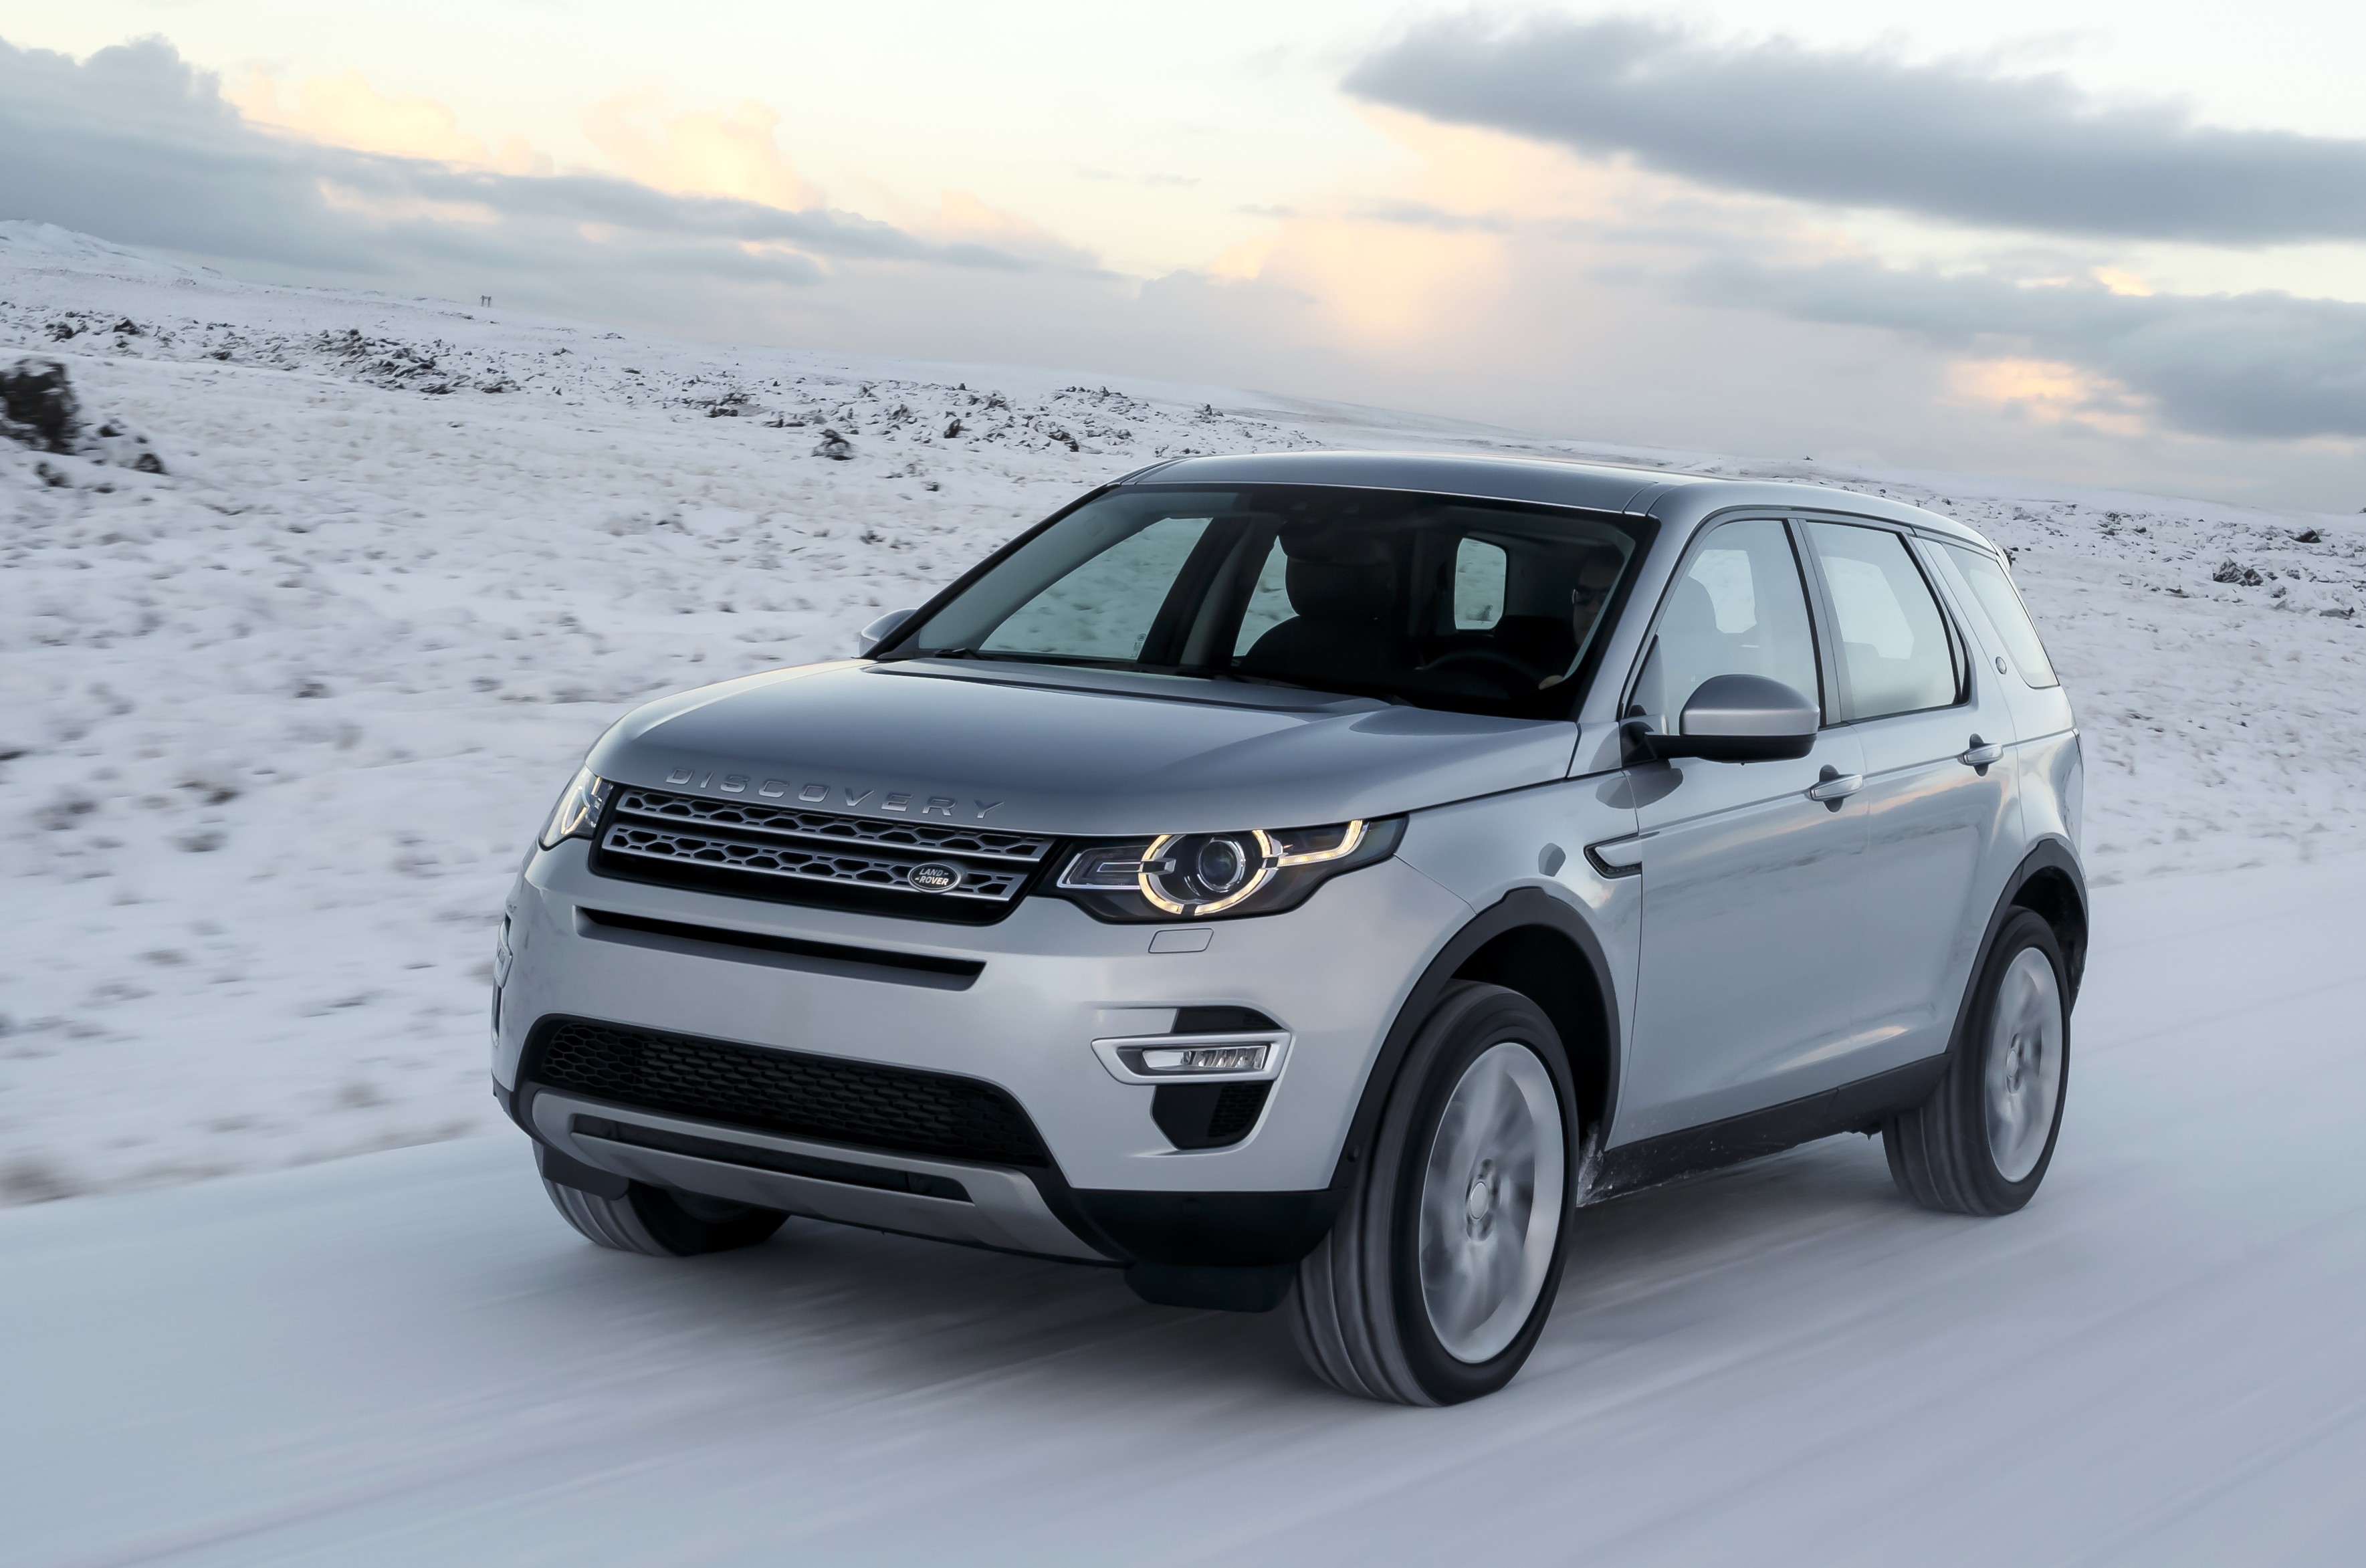 Time: 2015 Land Rover Sport – John's Journal on Autoline